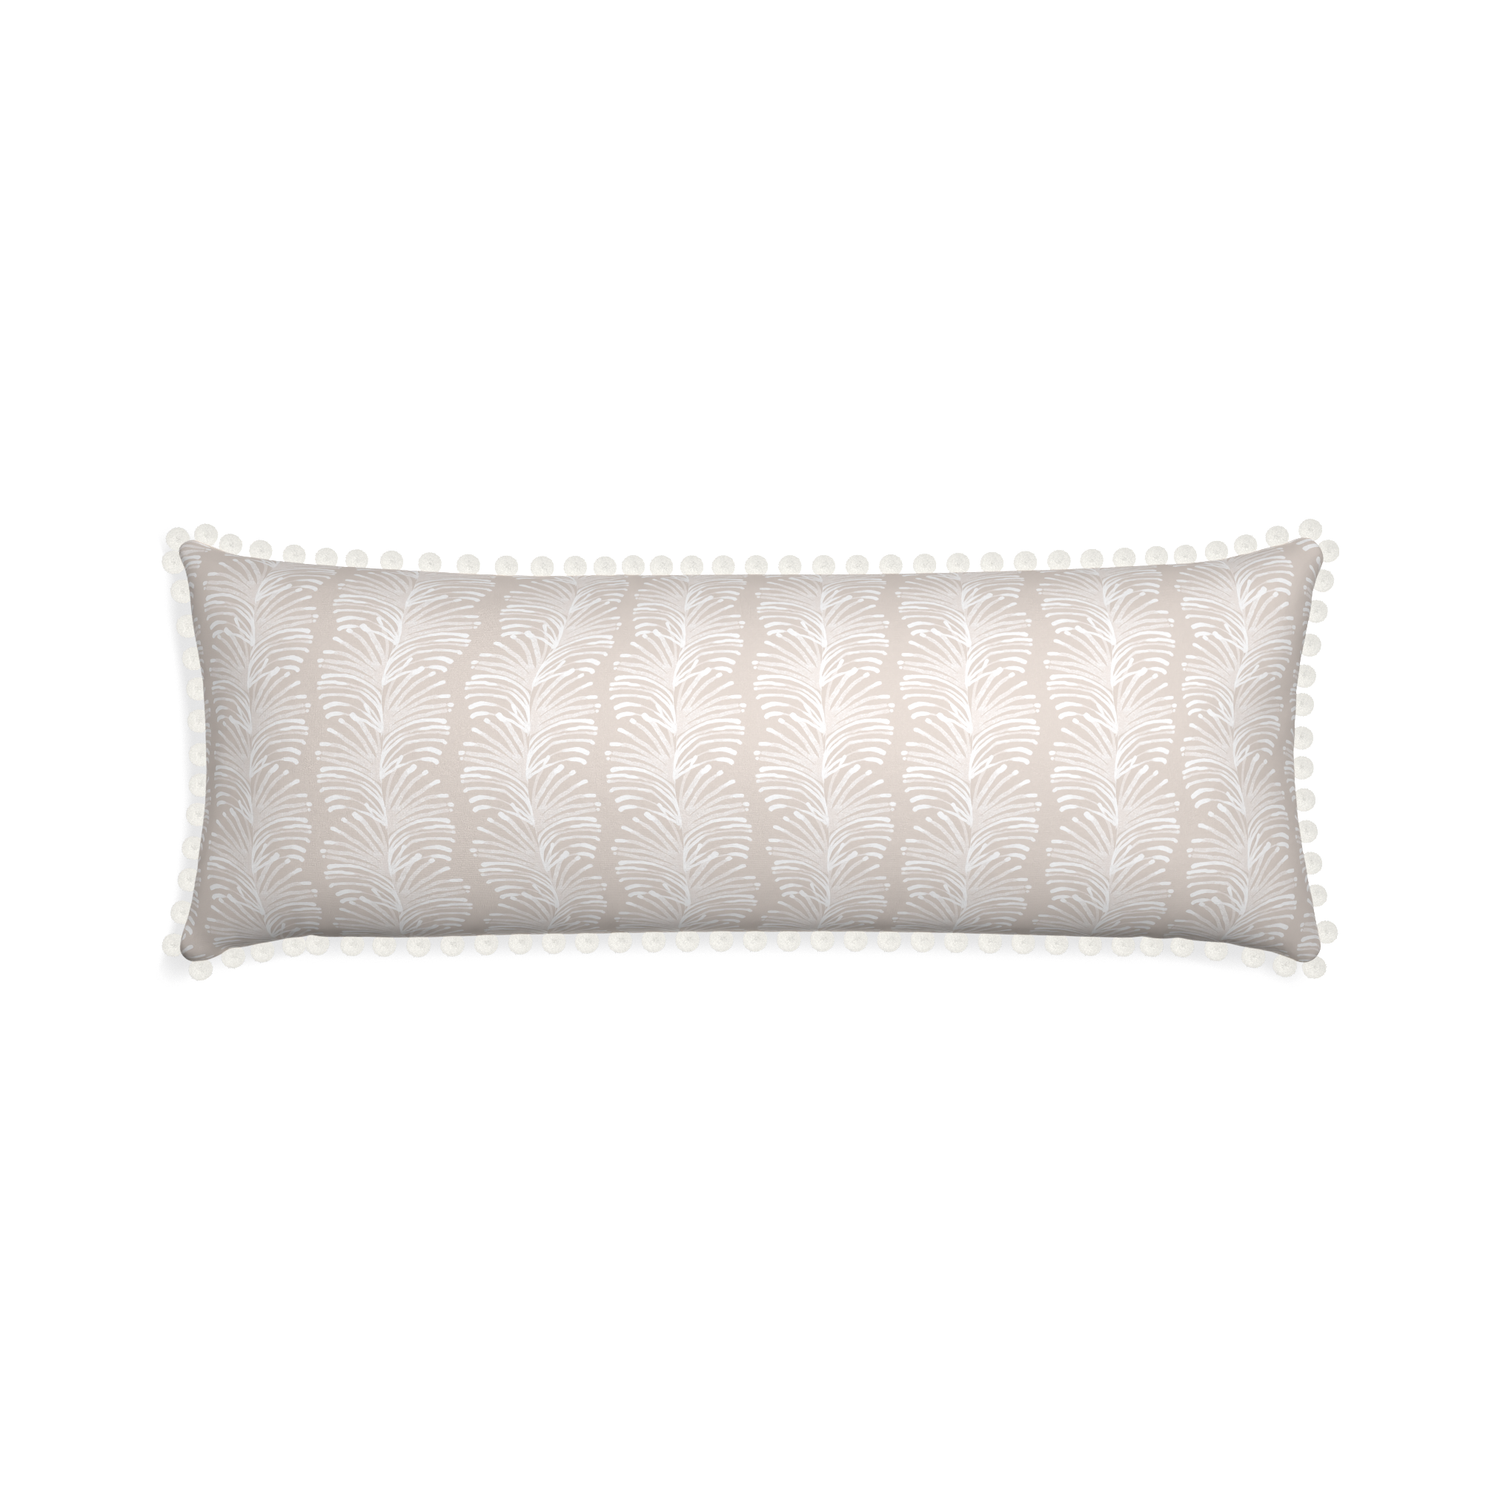 Xl-lumbar emma sand custom pillow with snow pom pom on white background